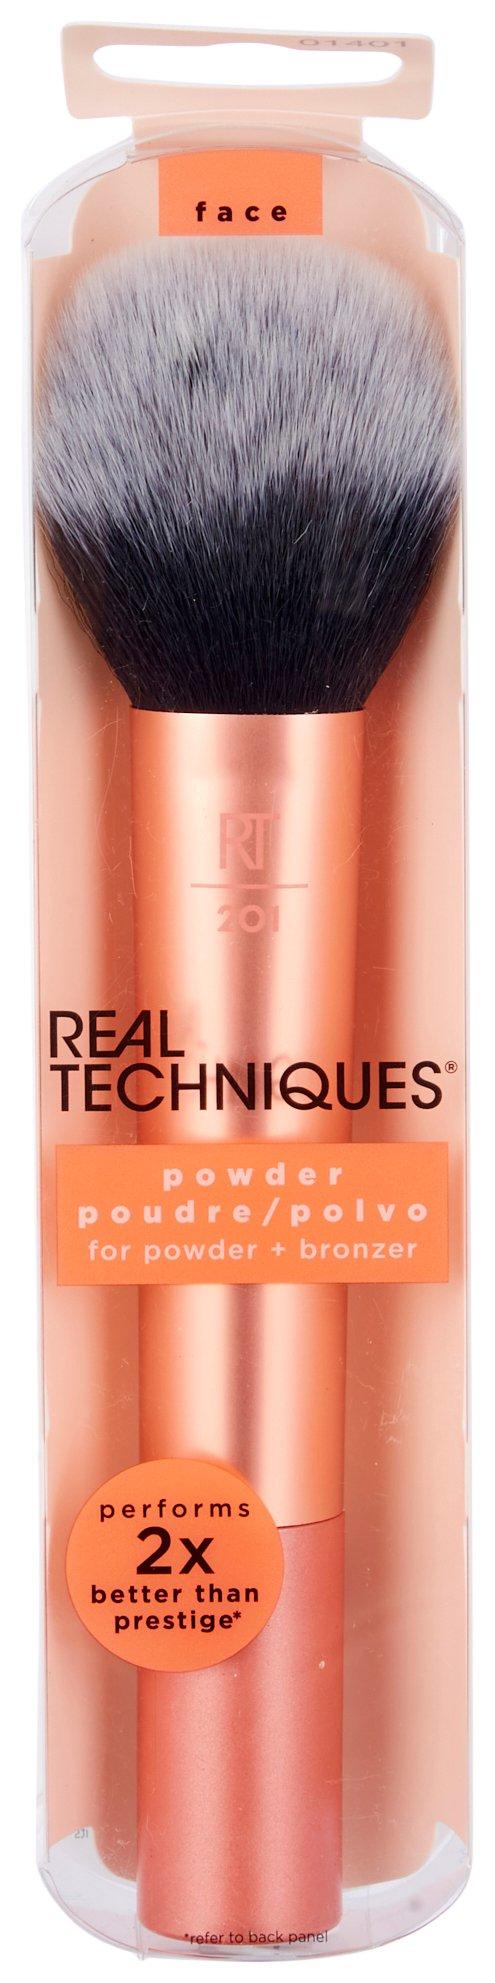 Real Techniques Powder & Bronzer Makeup Brush